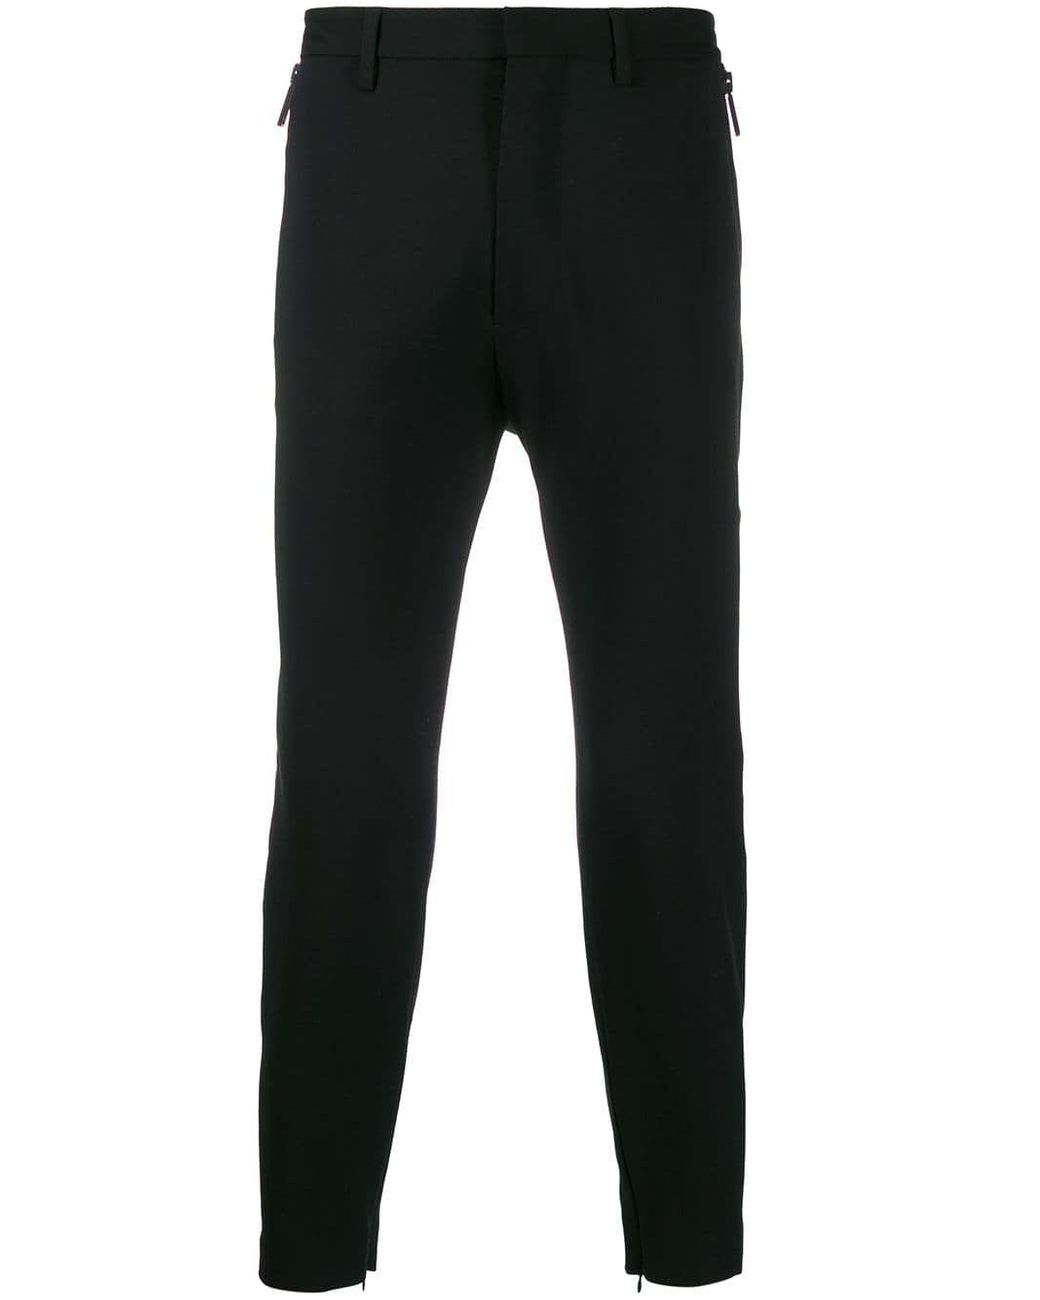 DSquared² Cotton Pants in Black for Men - Lyst